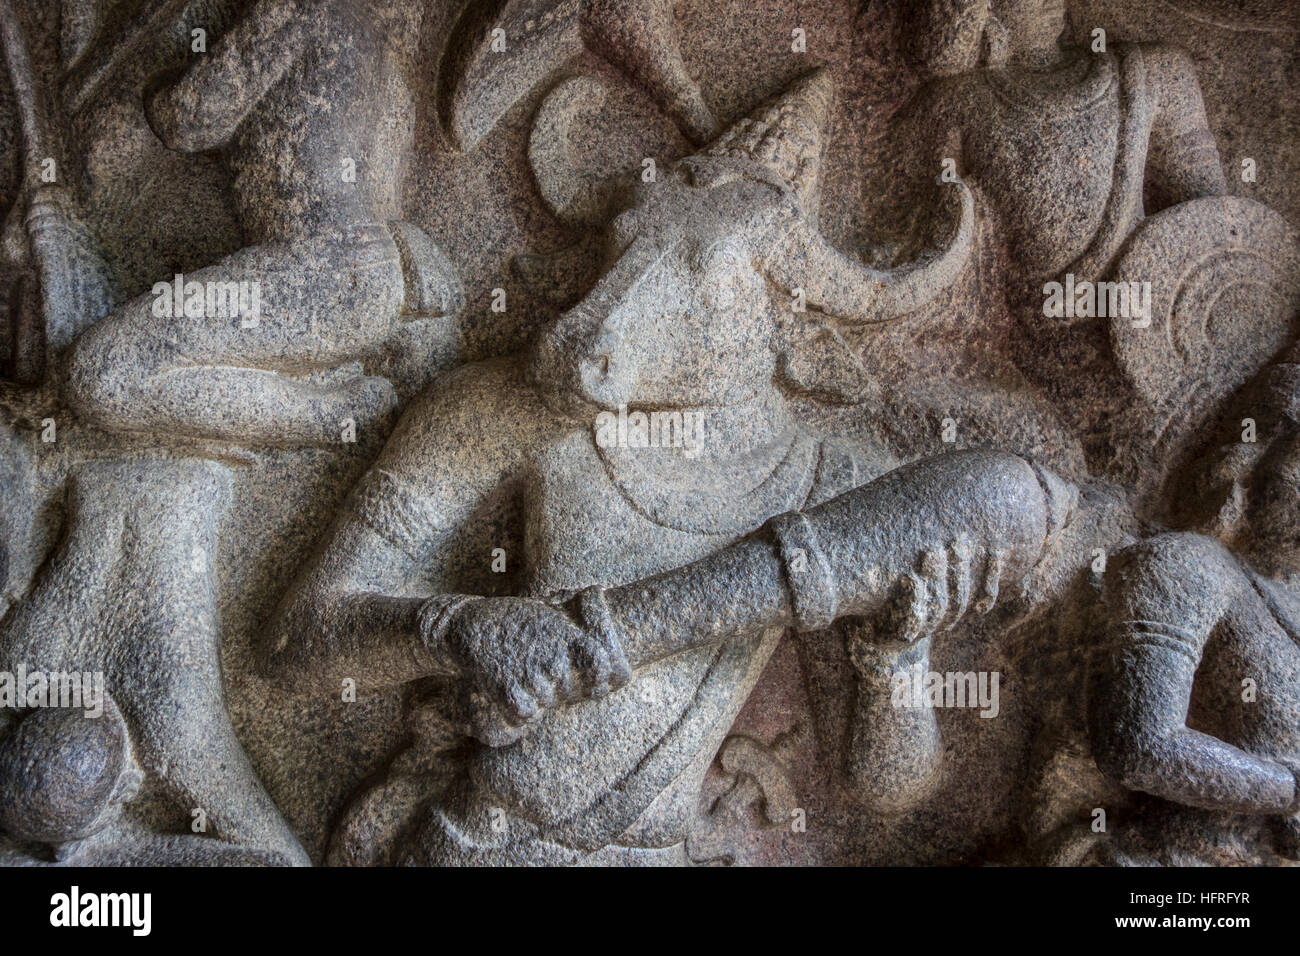 Sculpture de la tête de buffle Mahishasura, démon du panthéon hindou. (Grotte Mahishasuramardini, Tamil Nadu, Inde). Banque D'Images